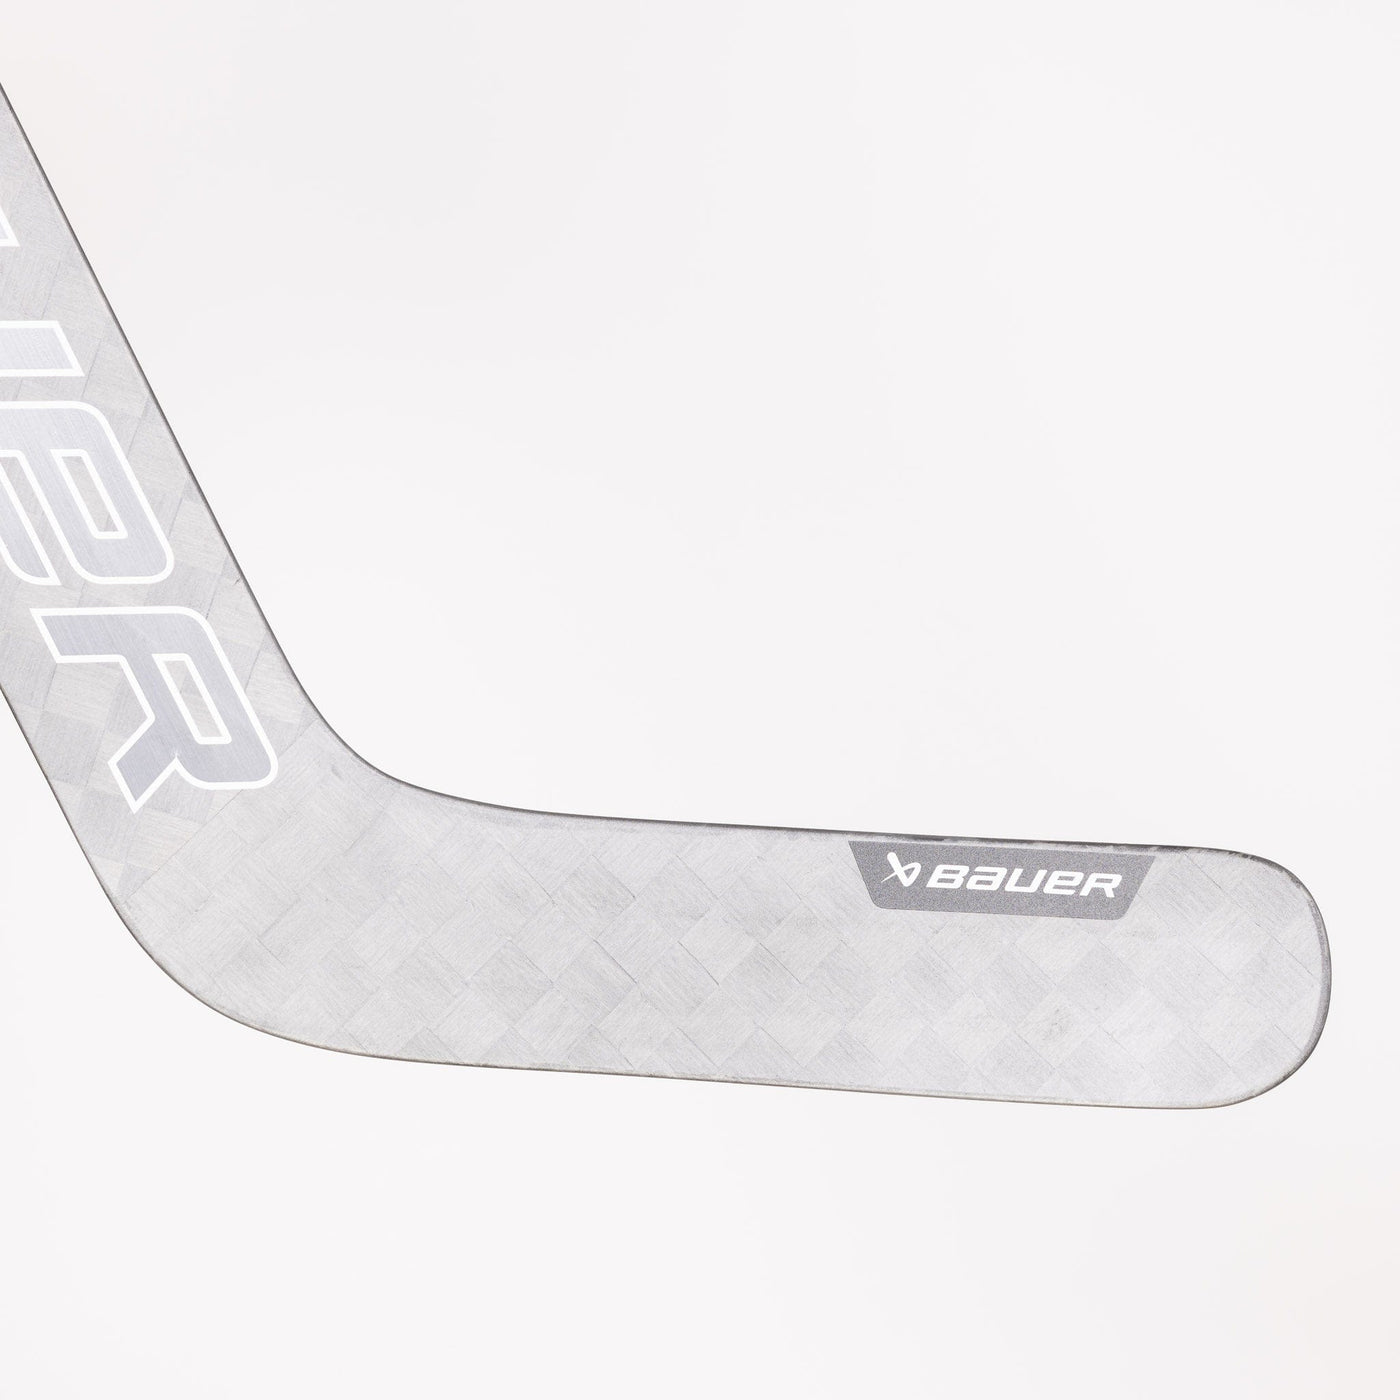 Bauer Vapor HyperLite2 Intermediate Goalie Stick - The Hockey Shop Source For Sports